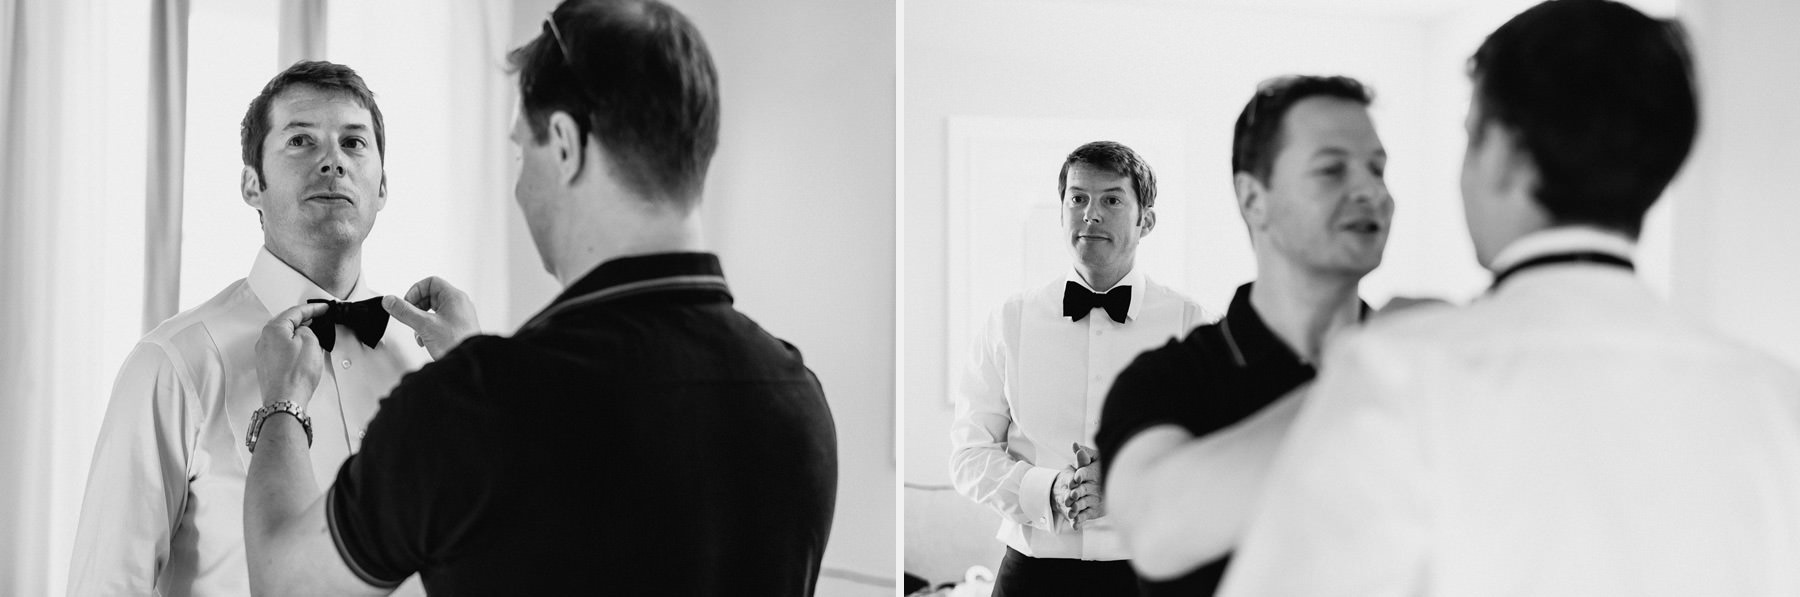 Siena wedding photographer borgo scopeto groom getting ready